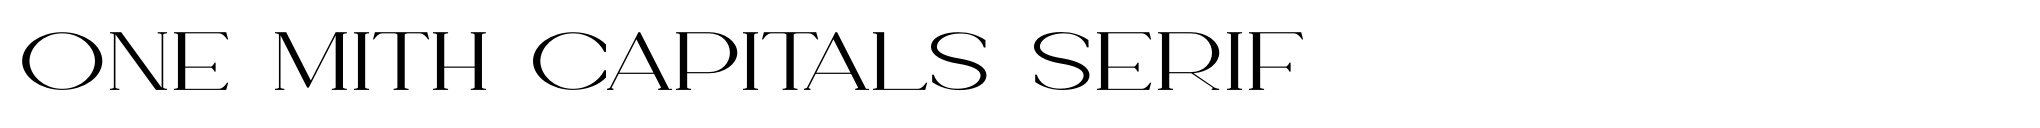 One Mith Capitals Serif image